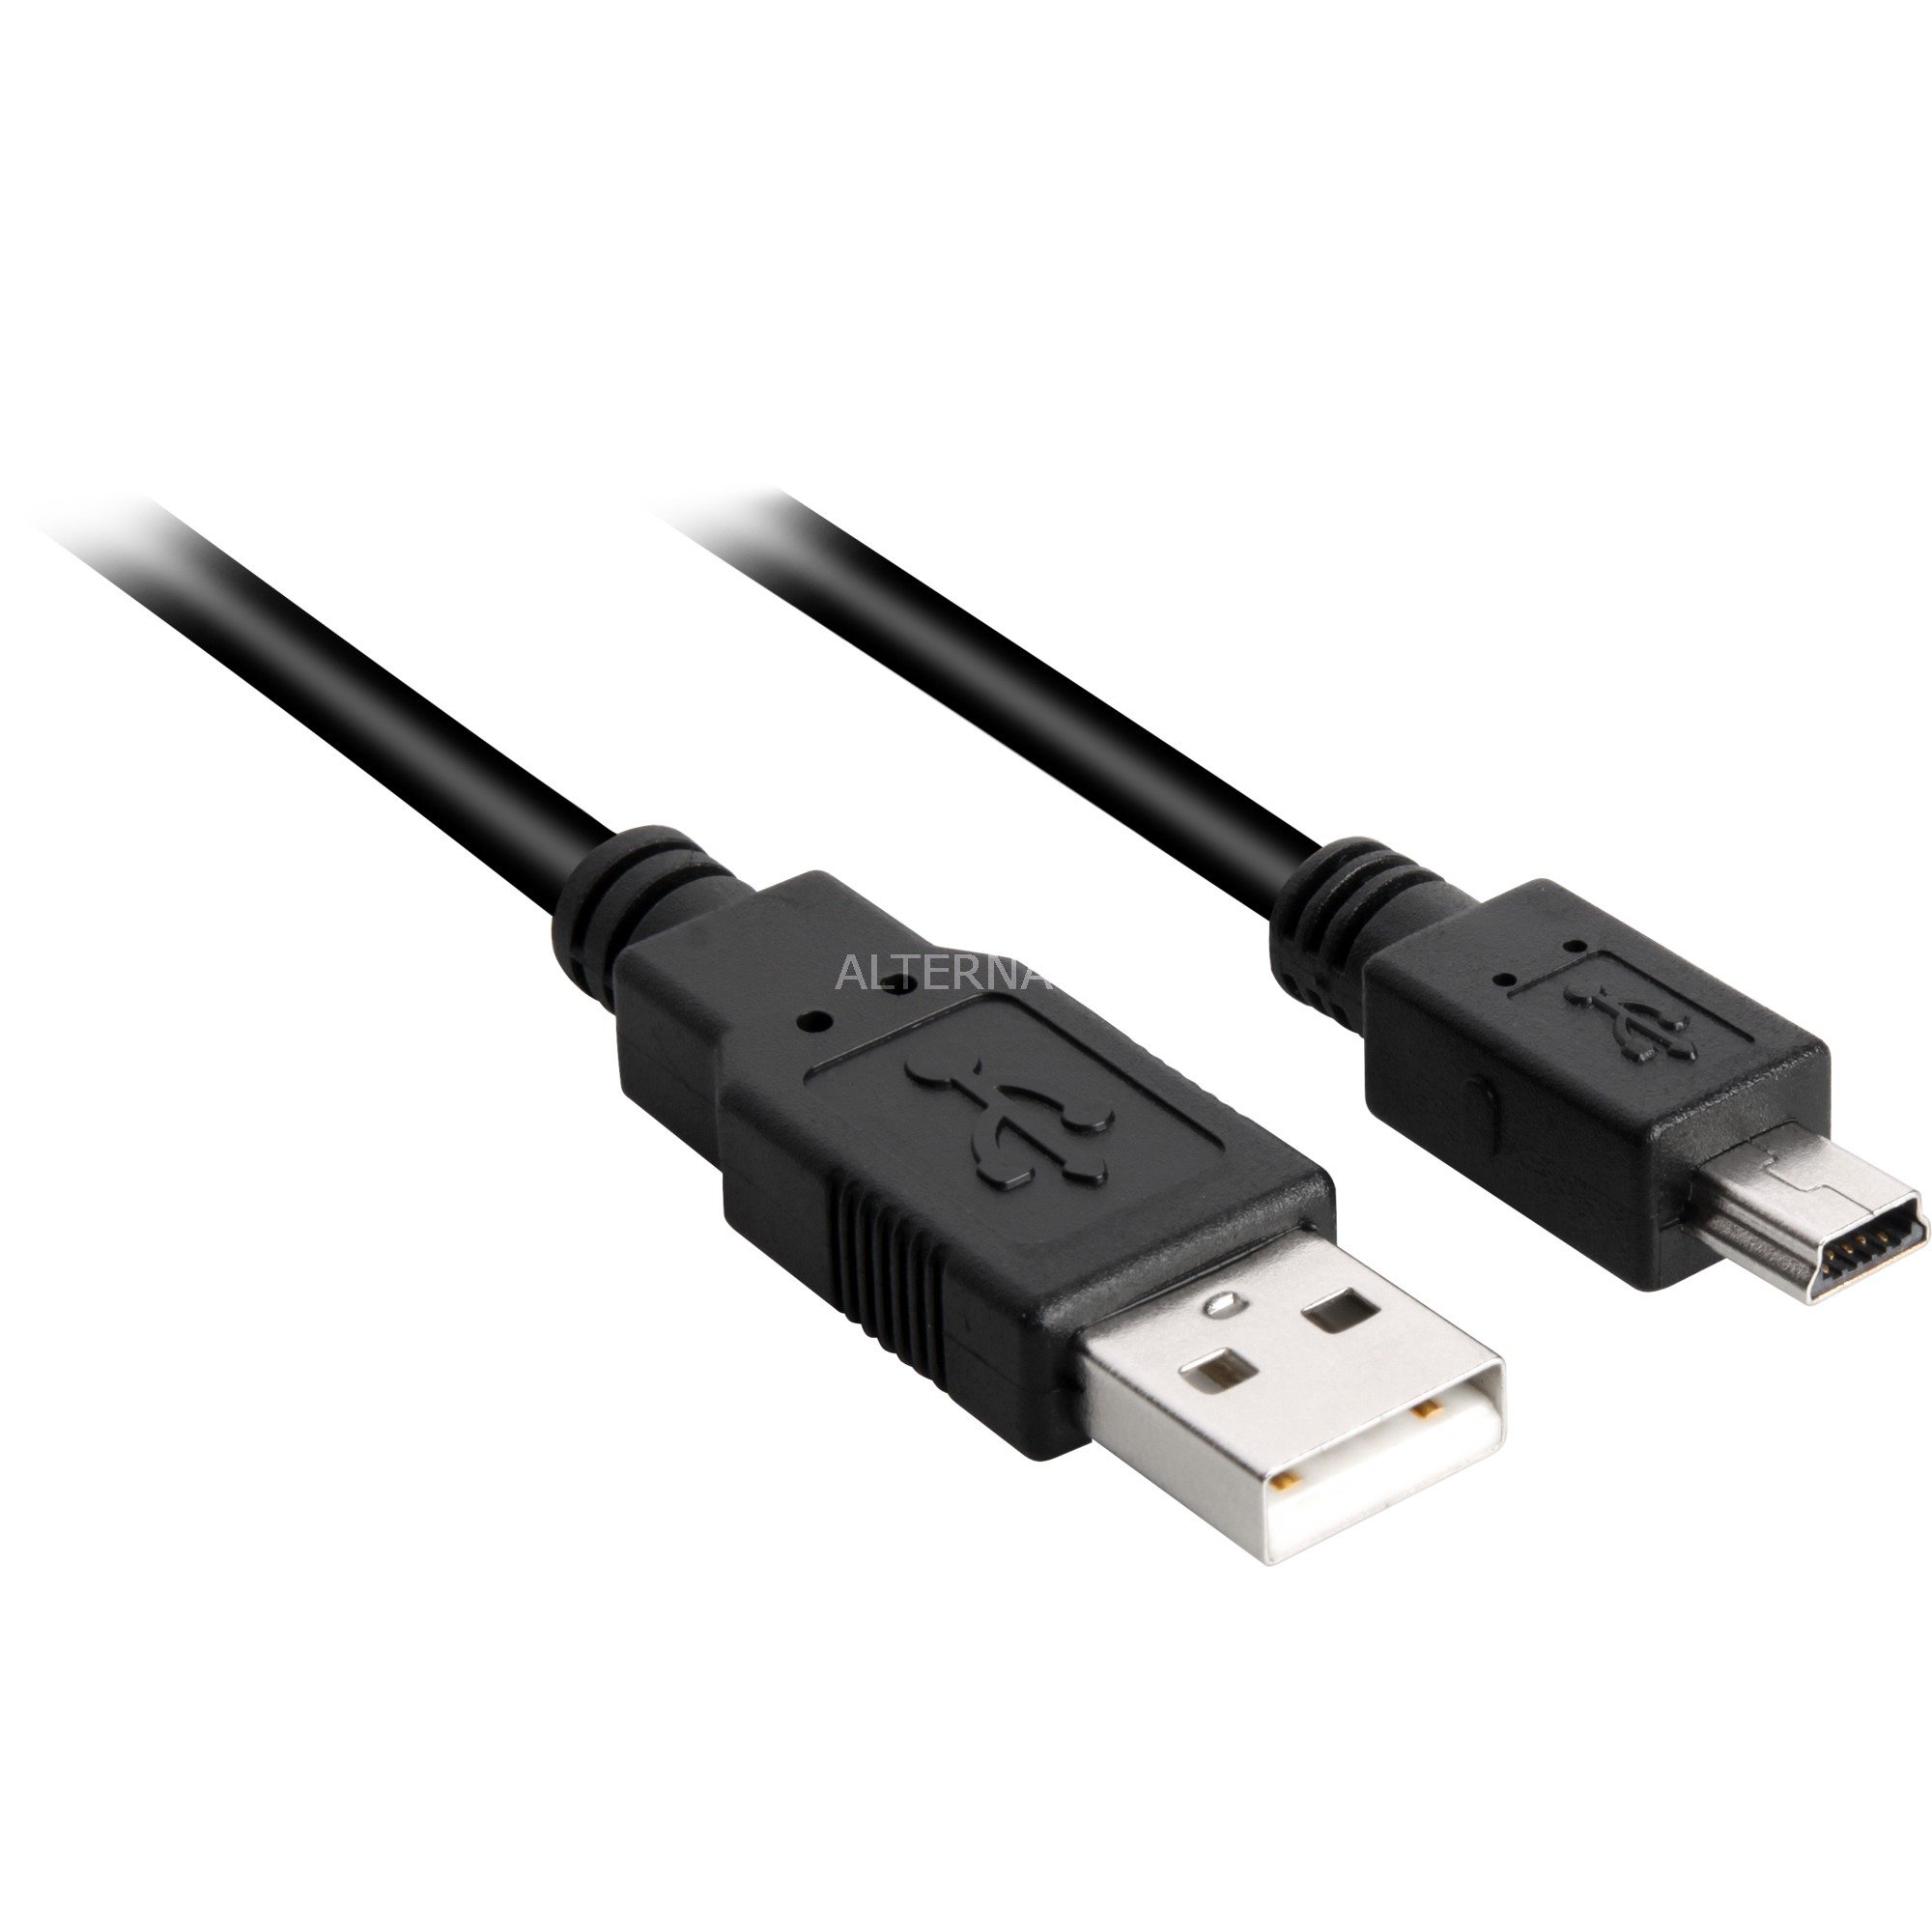 Image of Alternate - Kabel USB 2.0 A -> USB Mini-B online einkaufen bei Alternate